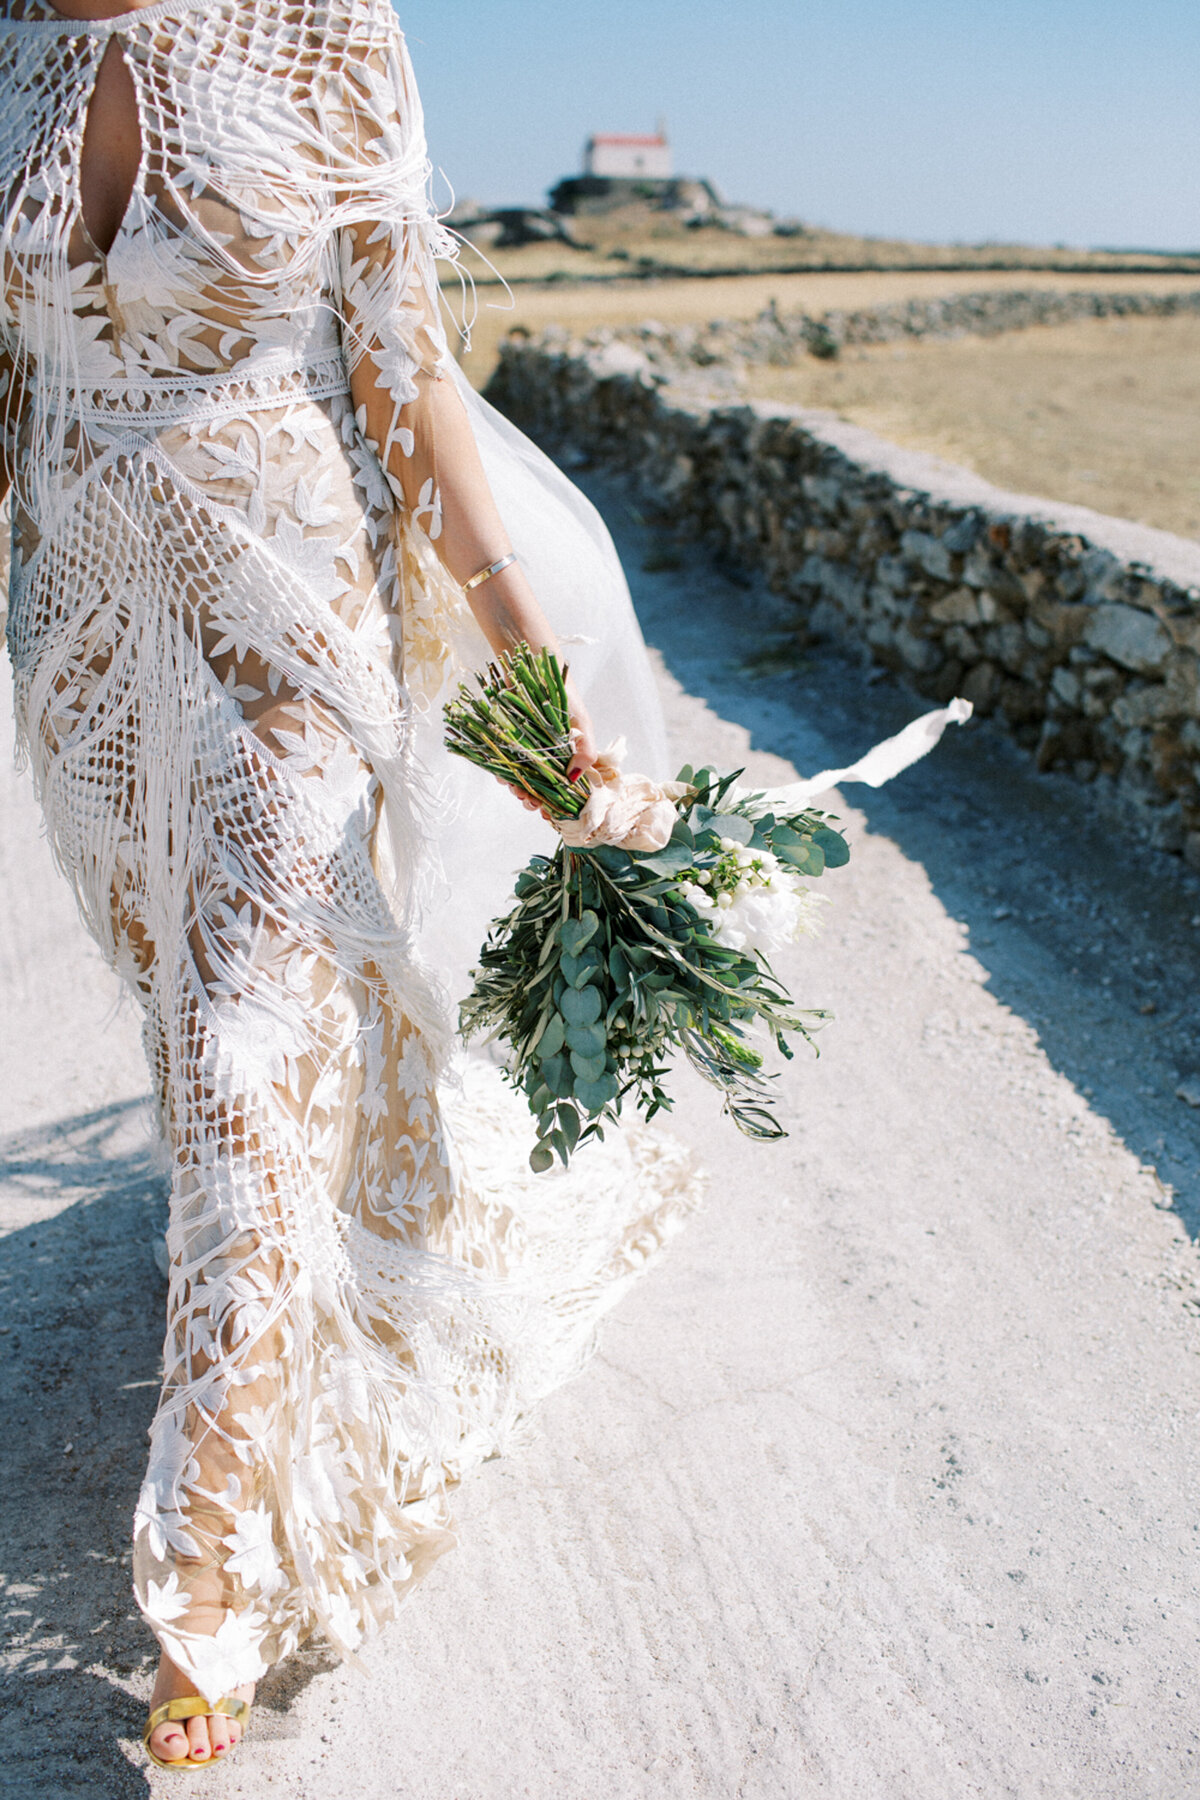 Bride carrying flowers on her wedding day in Mykonos